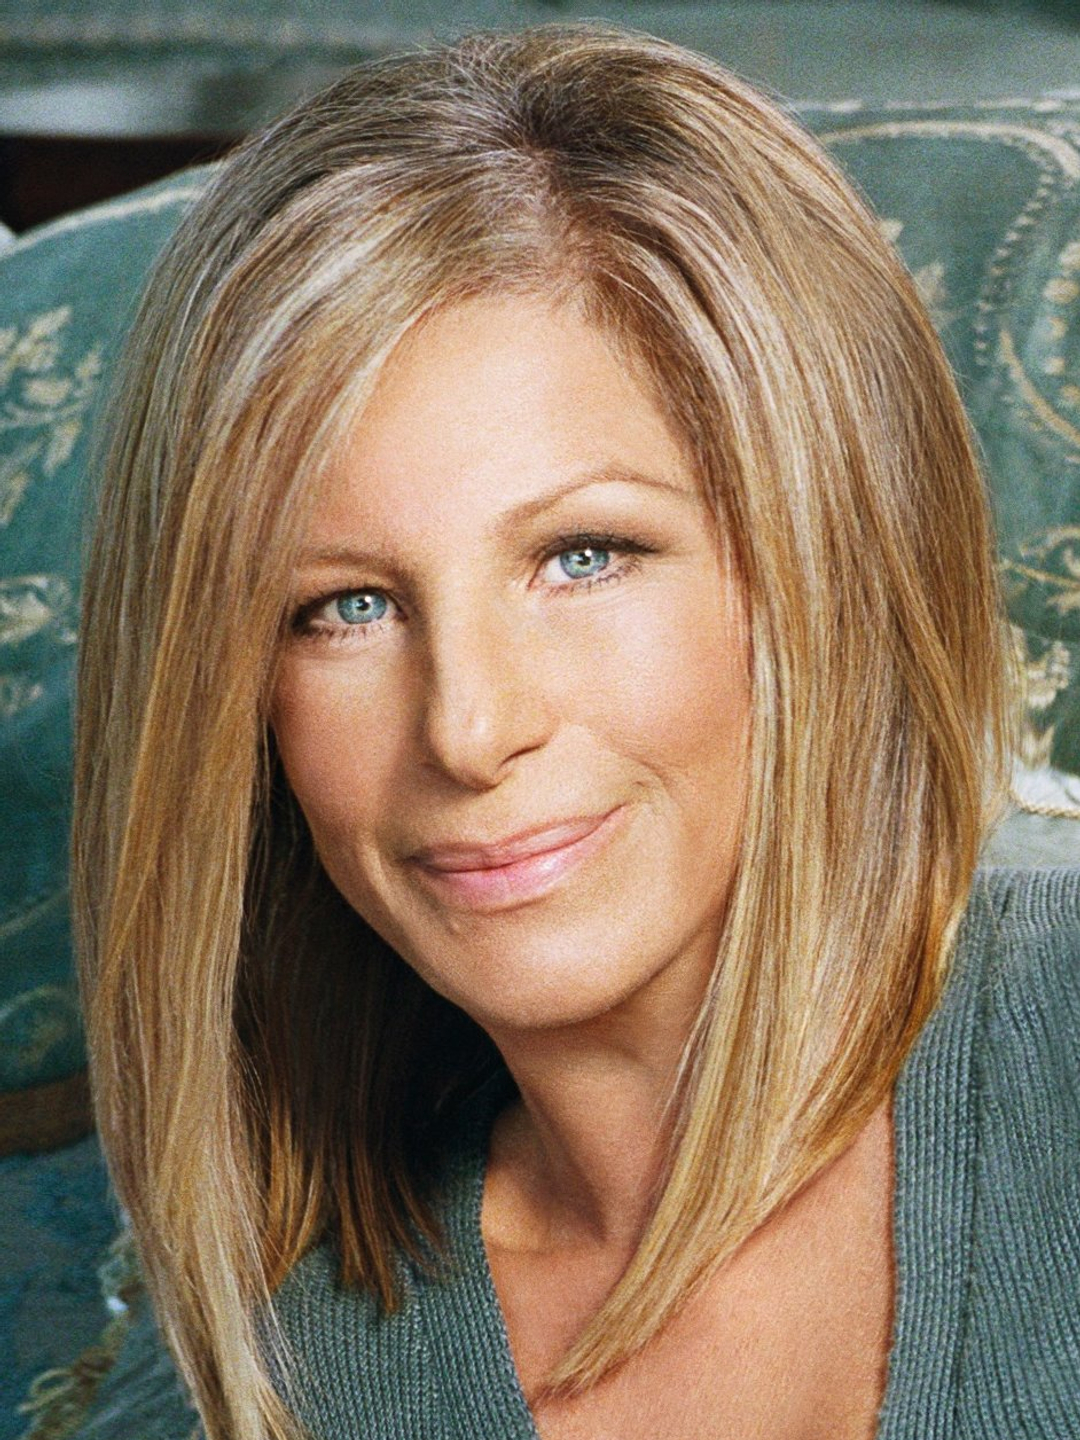 Barbra Streisand unphotoshopped pictures